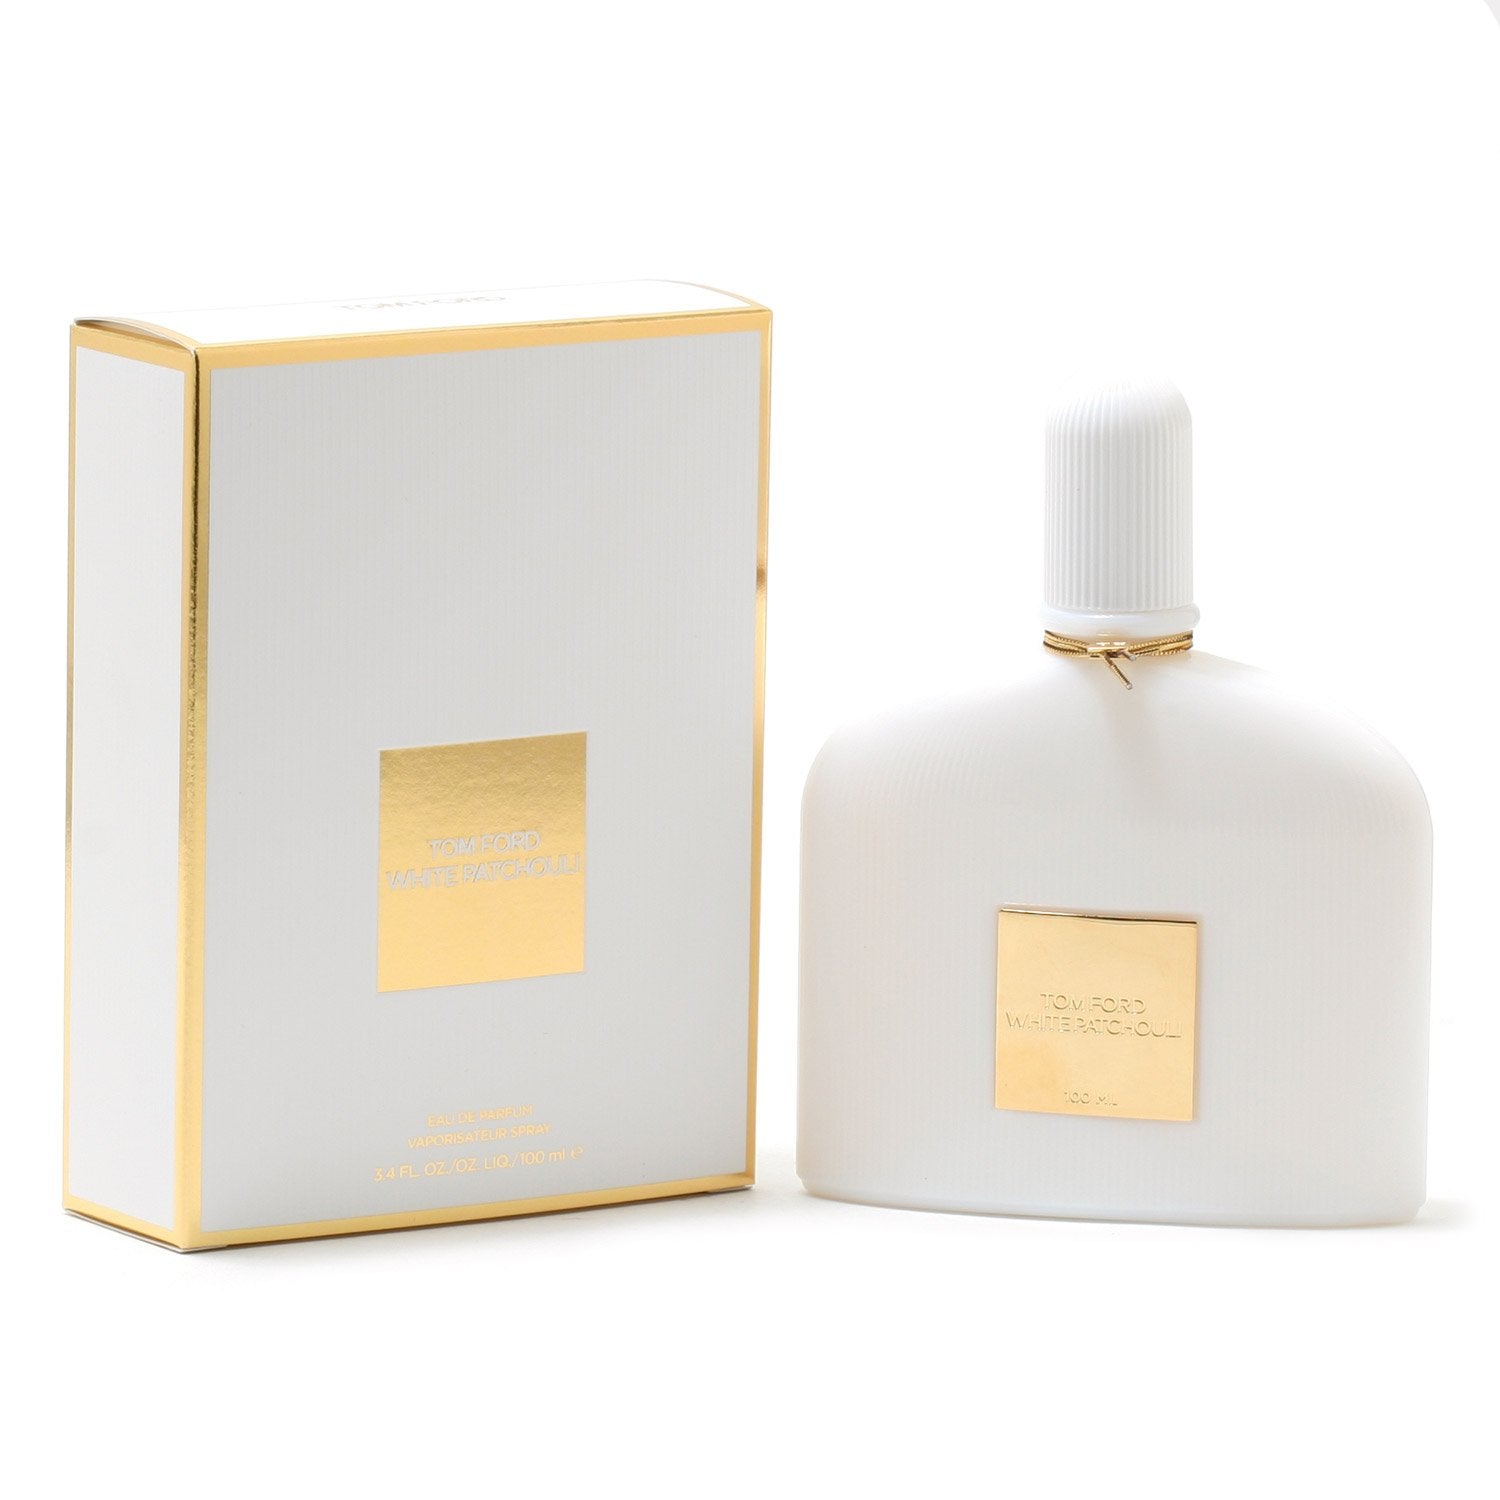 Perfume - TOM FORD WHITE PATCHOULI FOR WOMEN - EAU DE PARFUM SPRAY